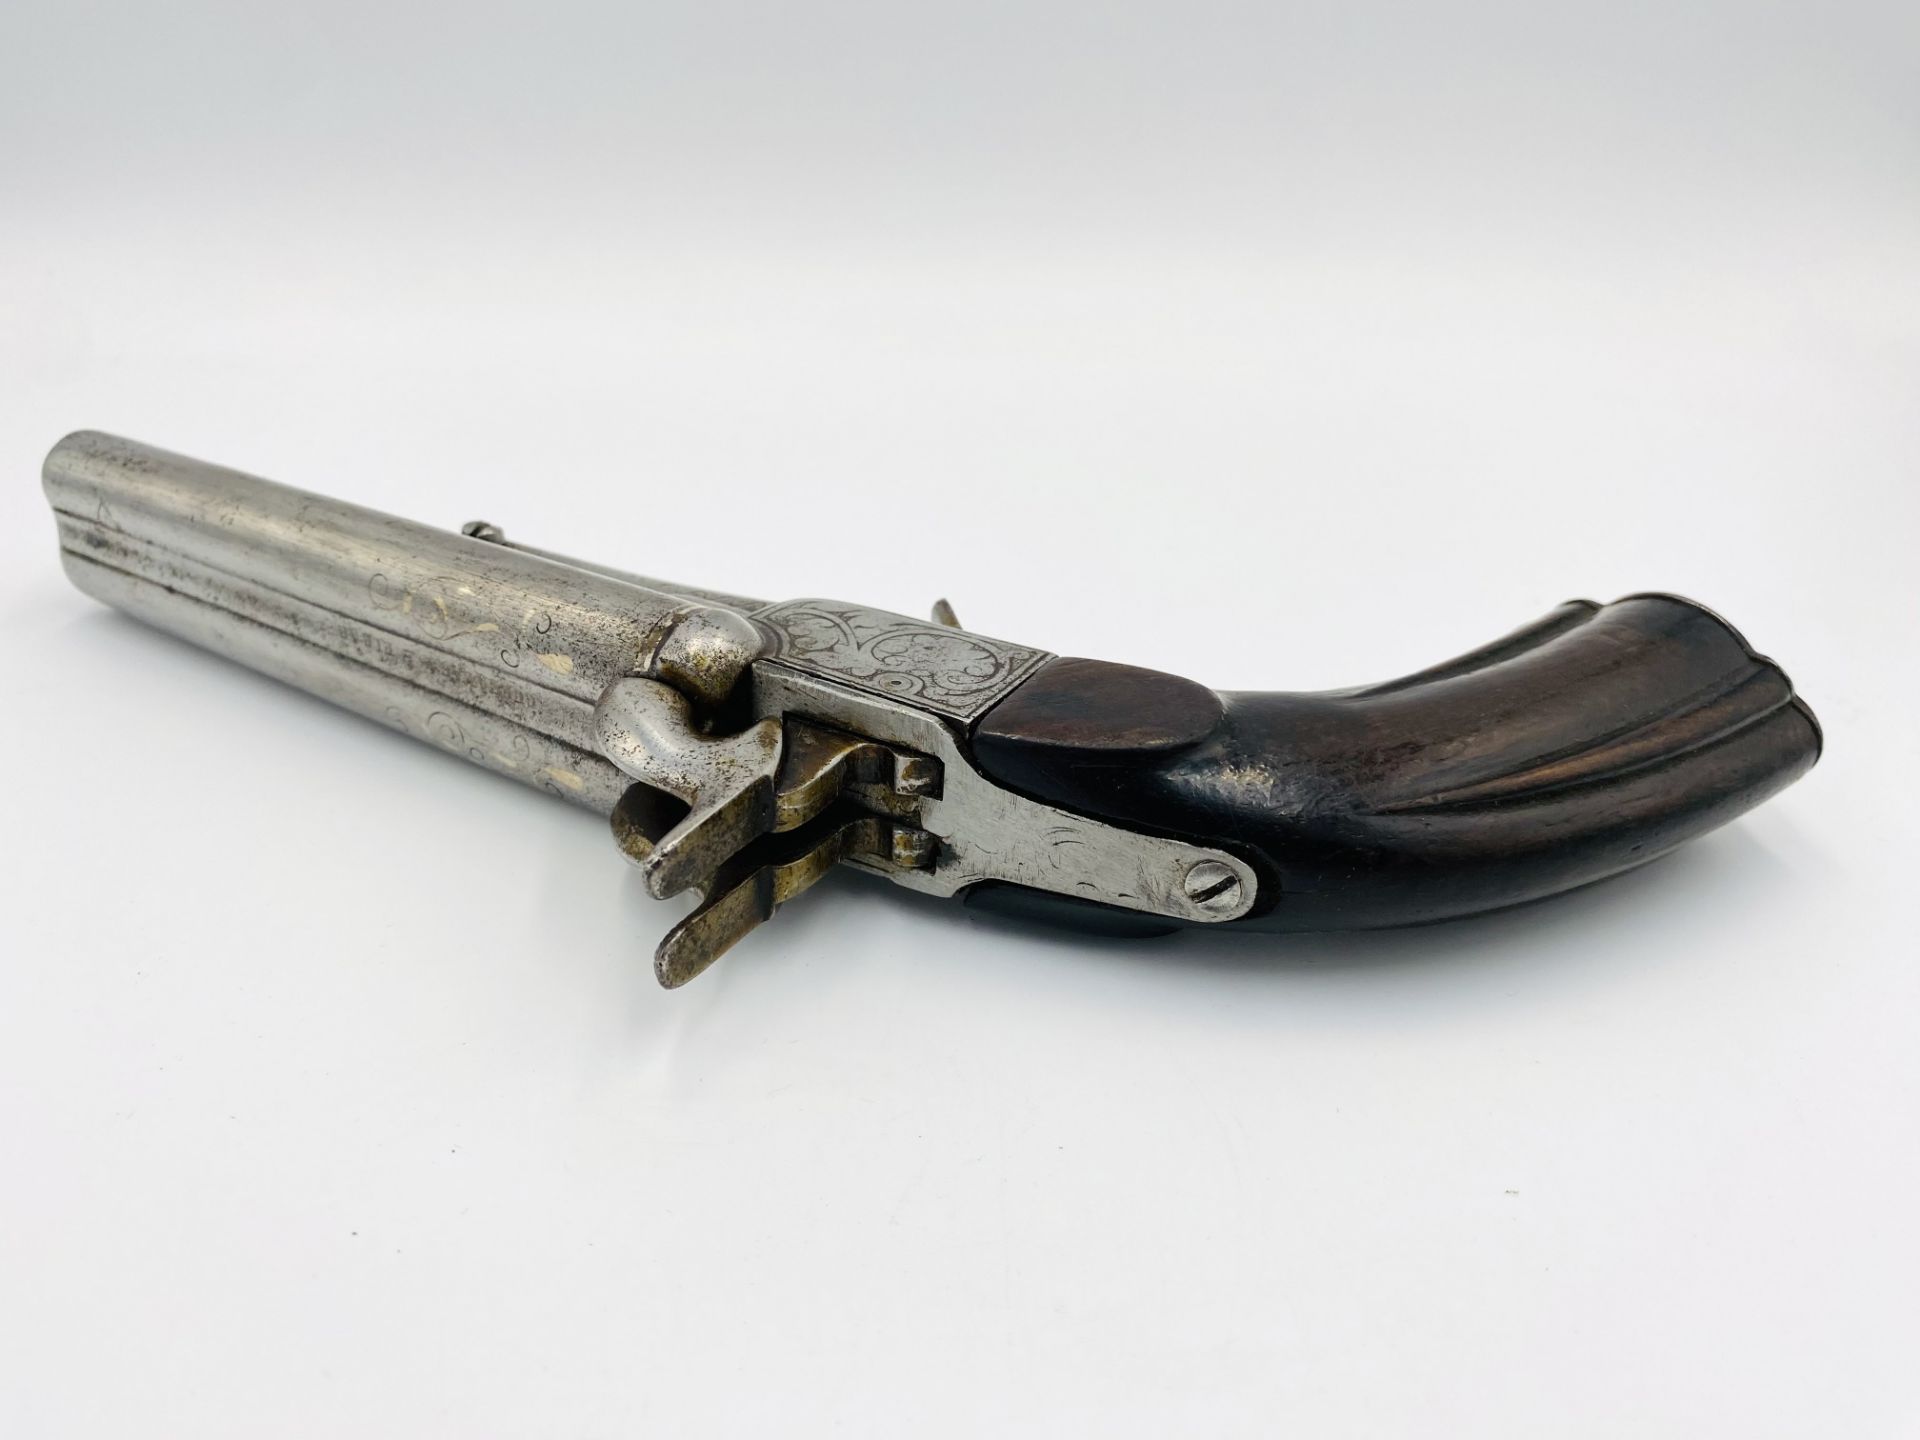 19th century percussion pistol - Image 3 of 6